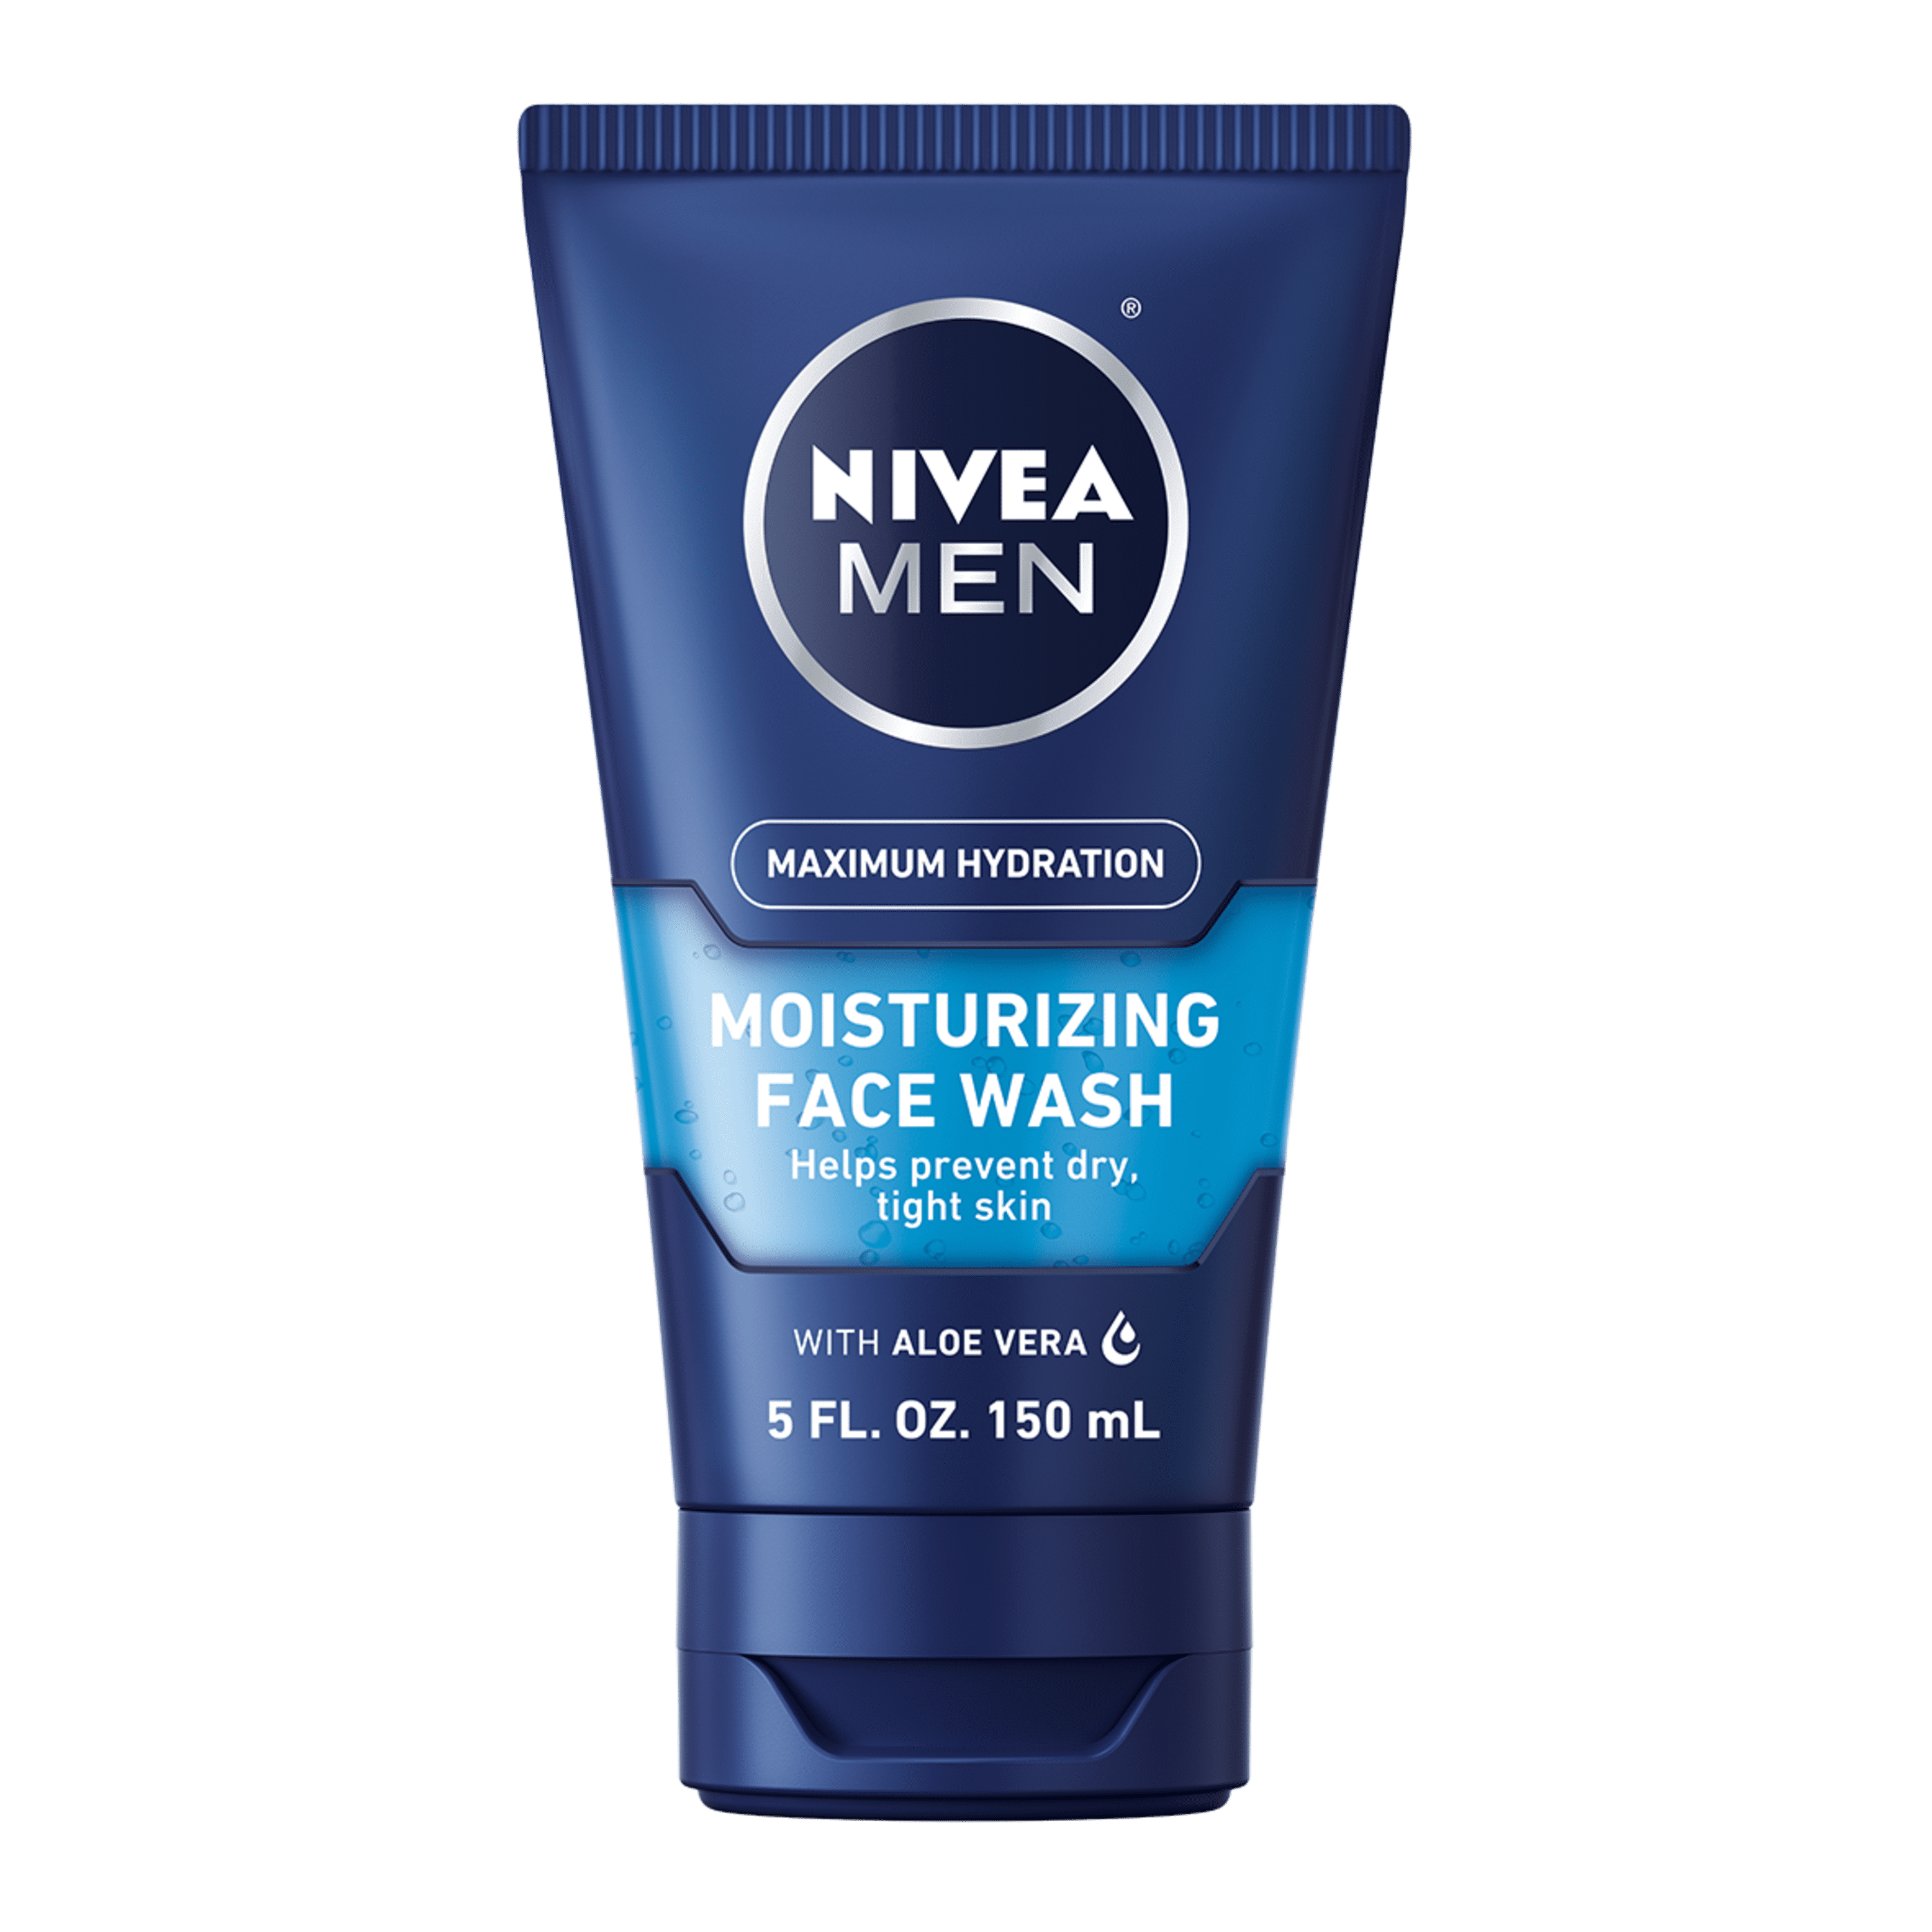 Bemiddelaar pen Cokes NIVEA MEN Maximum Hydration Moisturizing Face Wash, 5 Fl Oz Tube -  Walmart.com